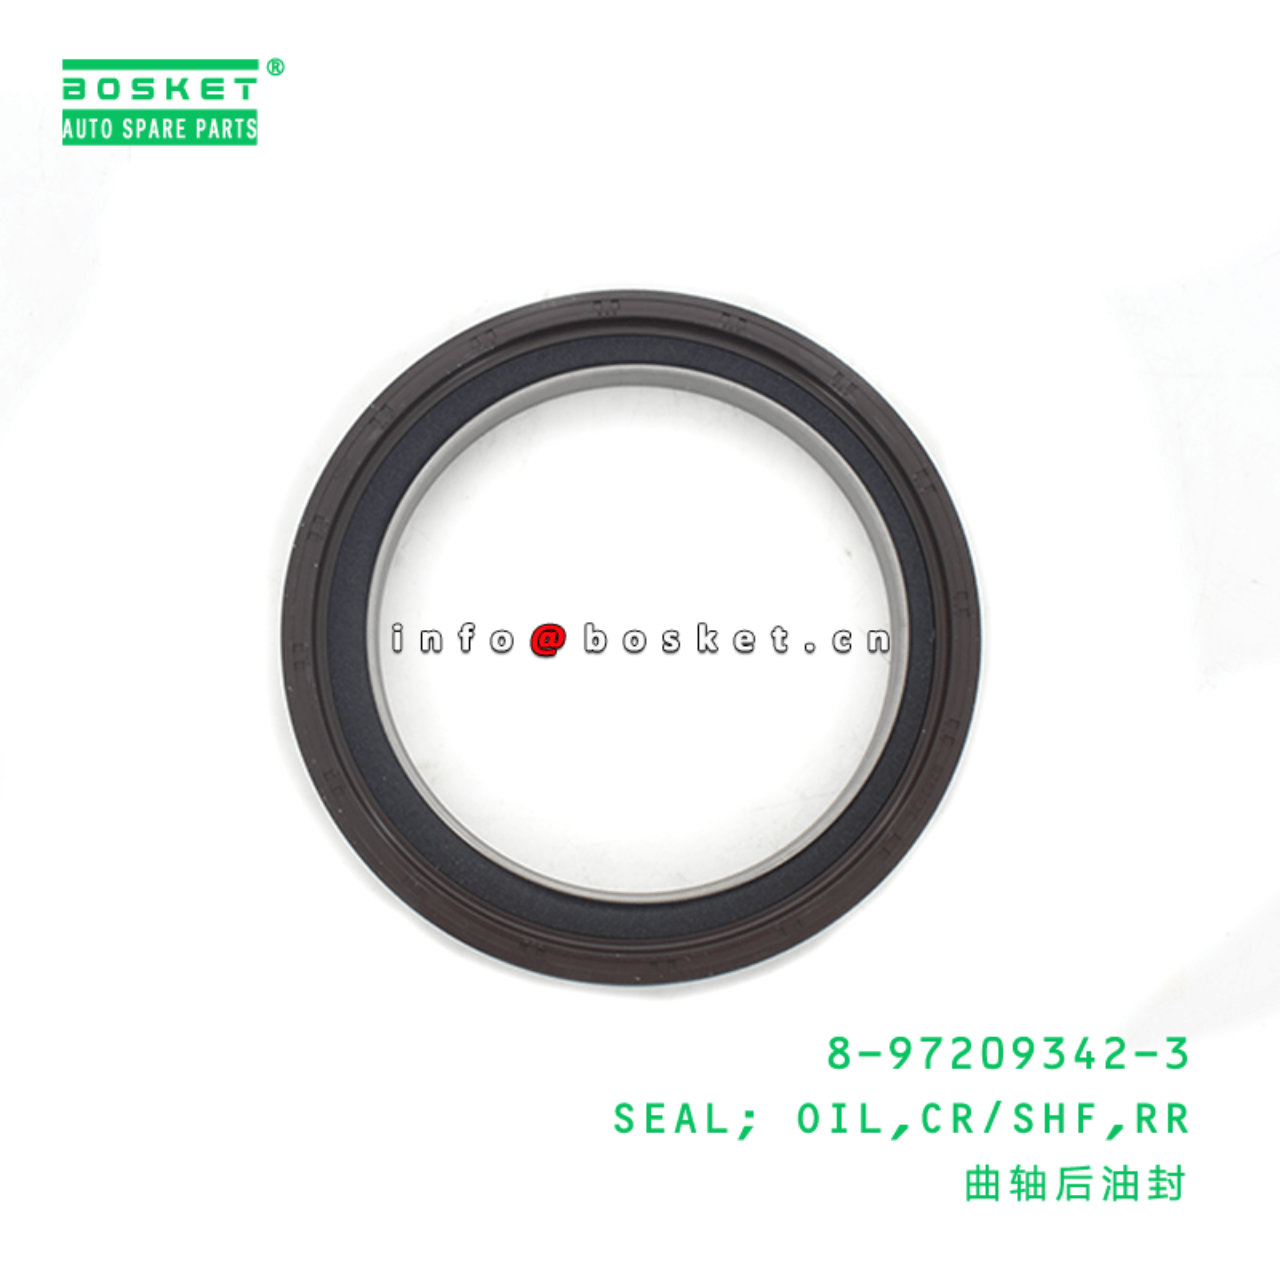 8-97209342-3 Rear Crankshaft Seal 8972093423 Suitable for ISUZU XYB 4HK1 6HK1